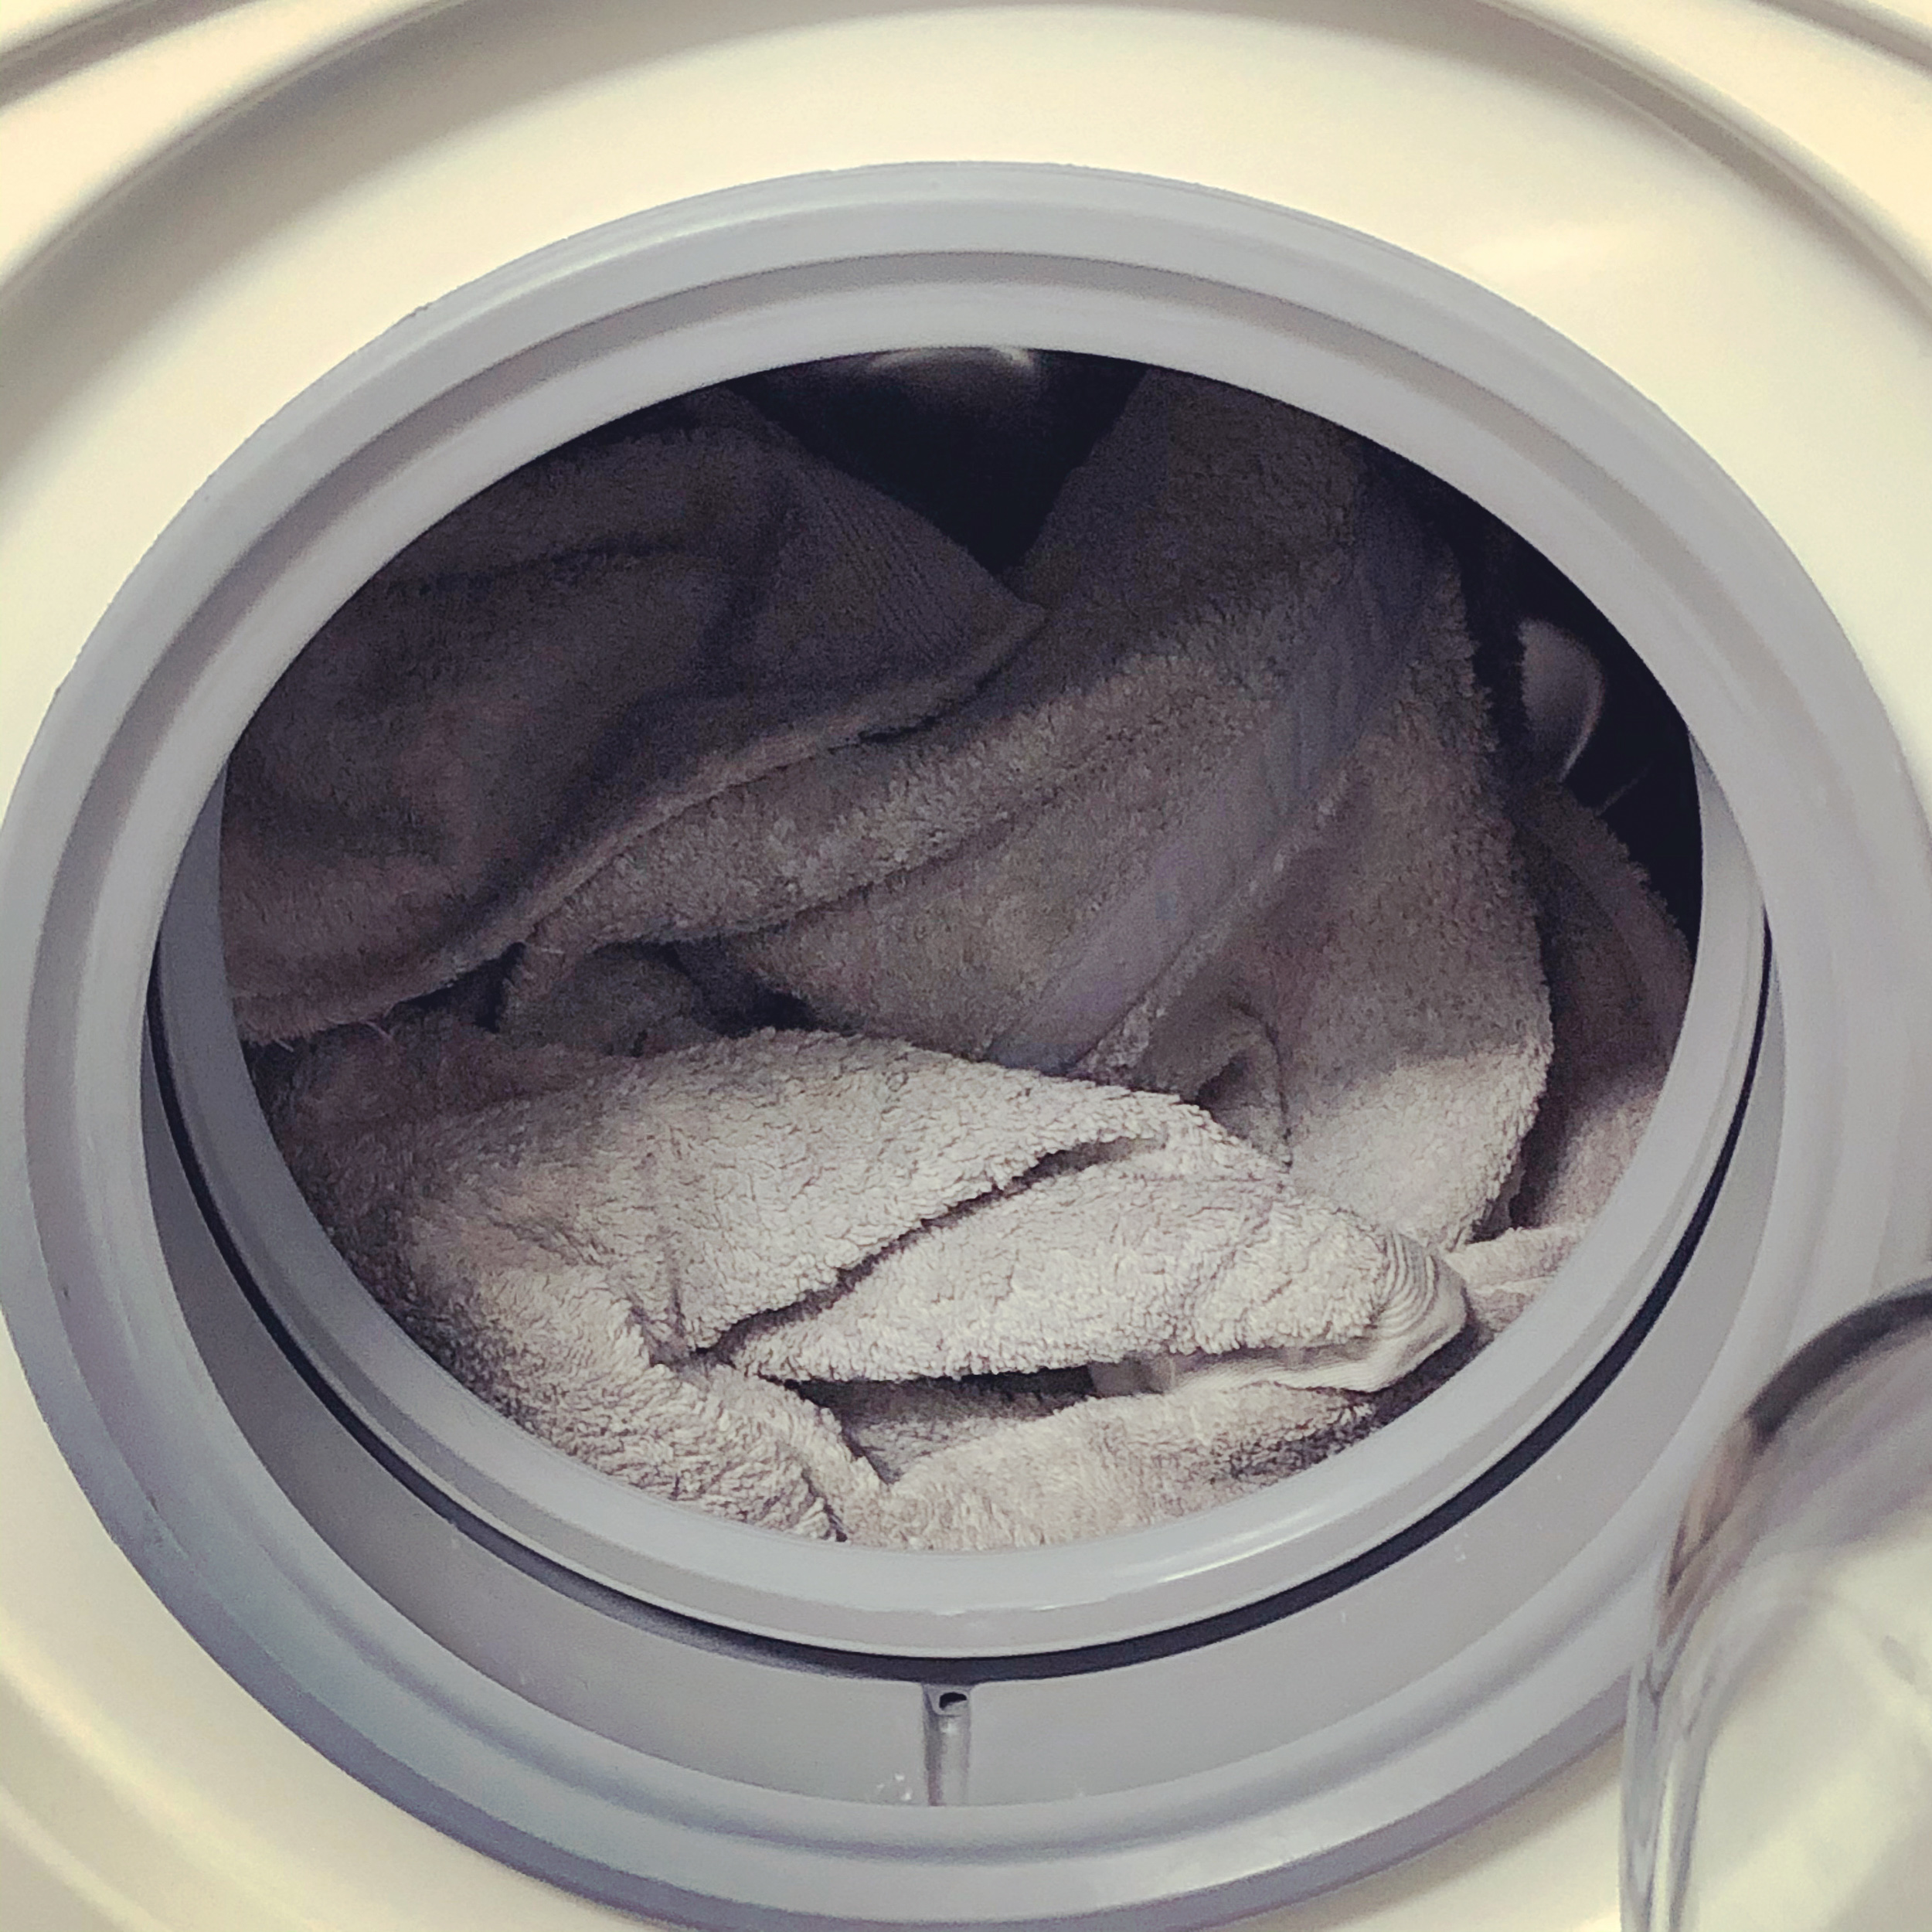 Laundry face